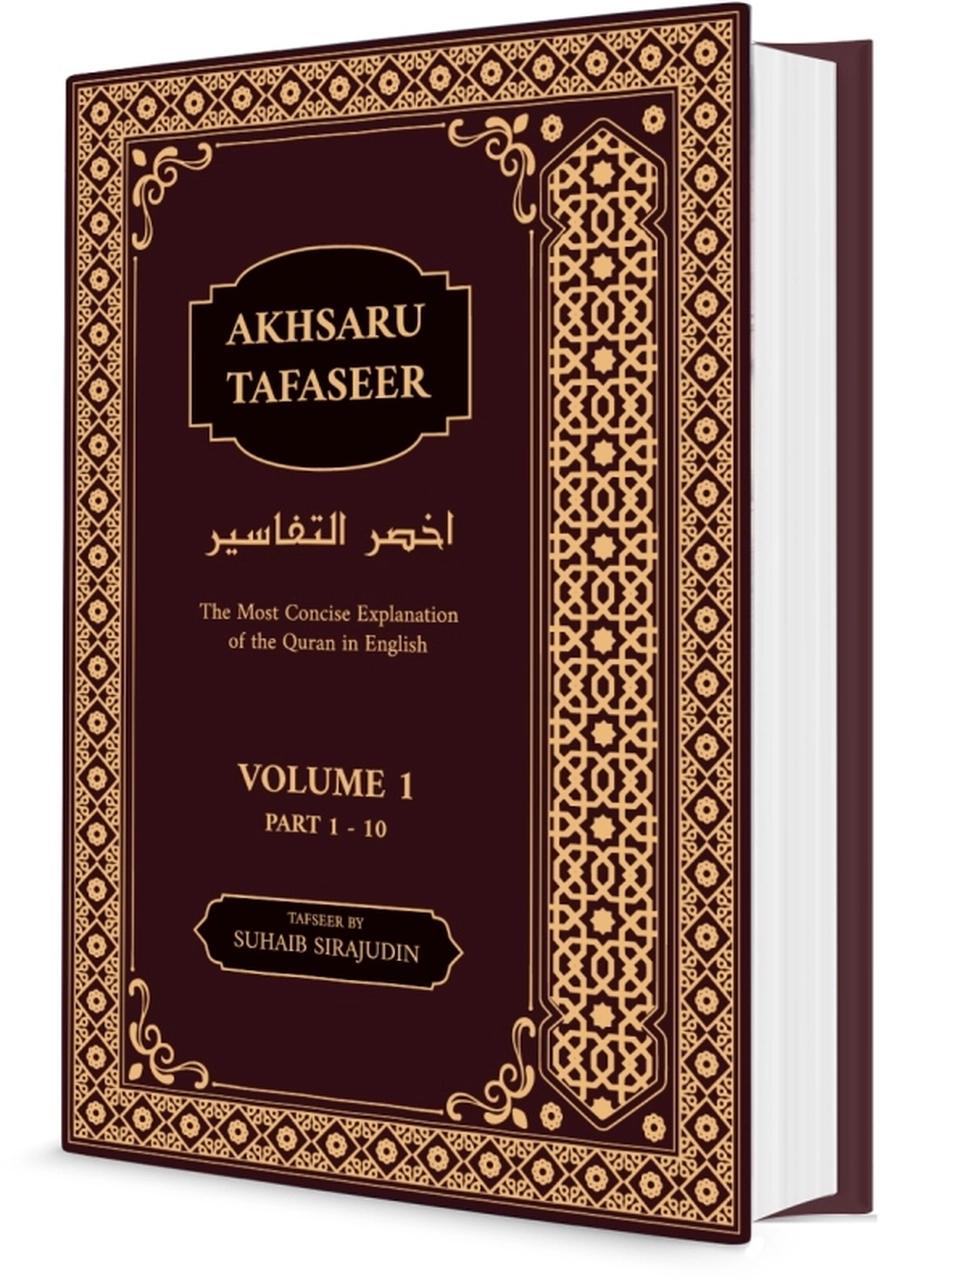 [3 vol set] Akhsaru Tafaseer by Suhaib Sirajudin